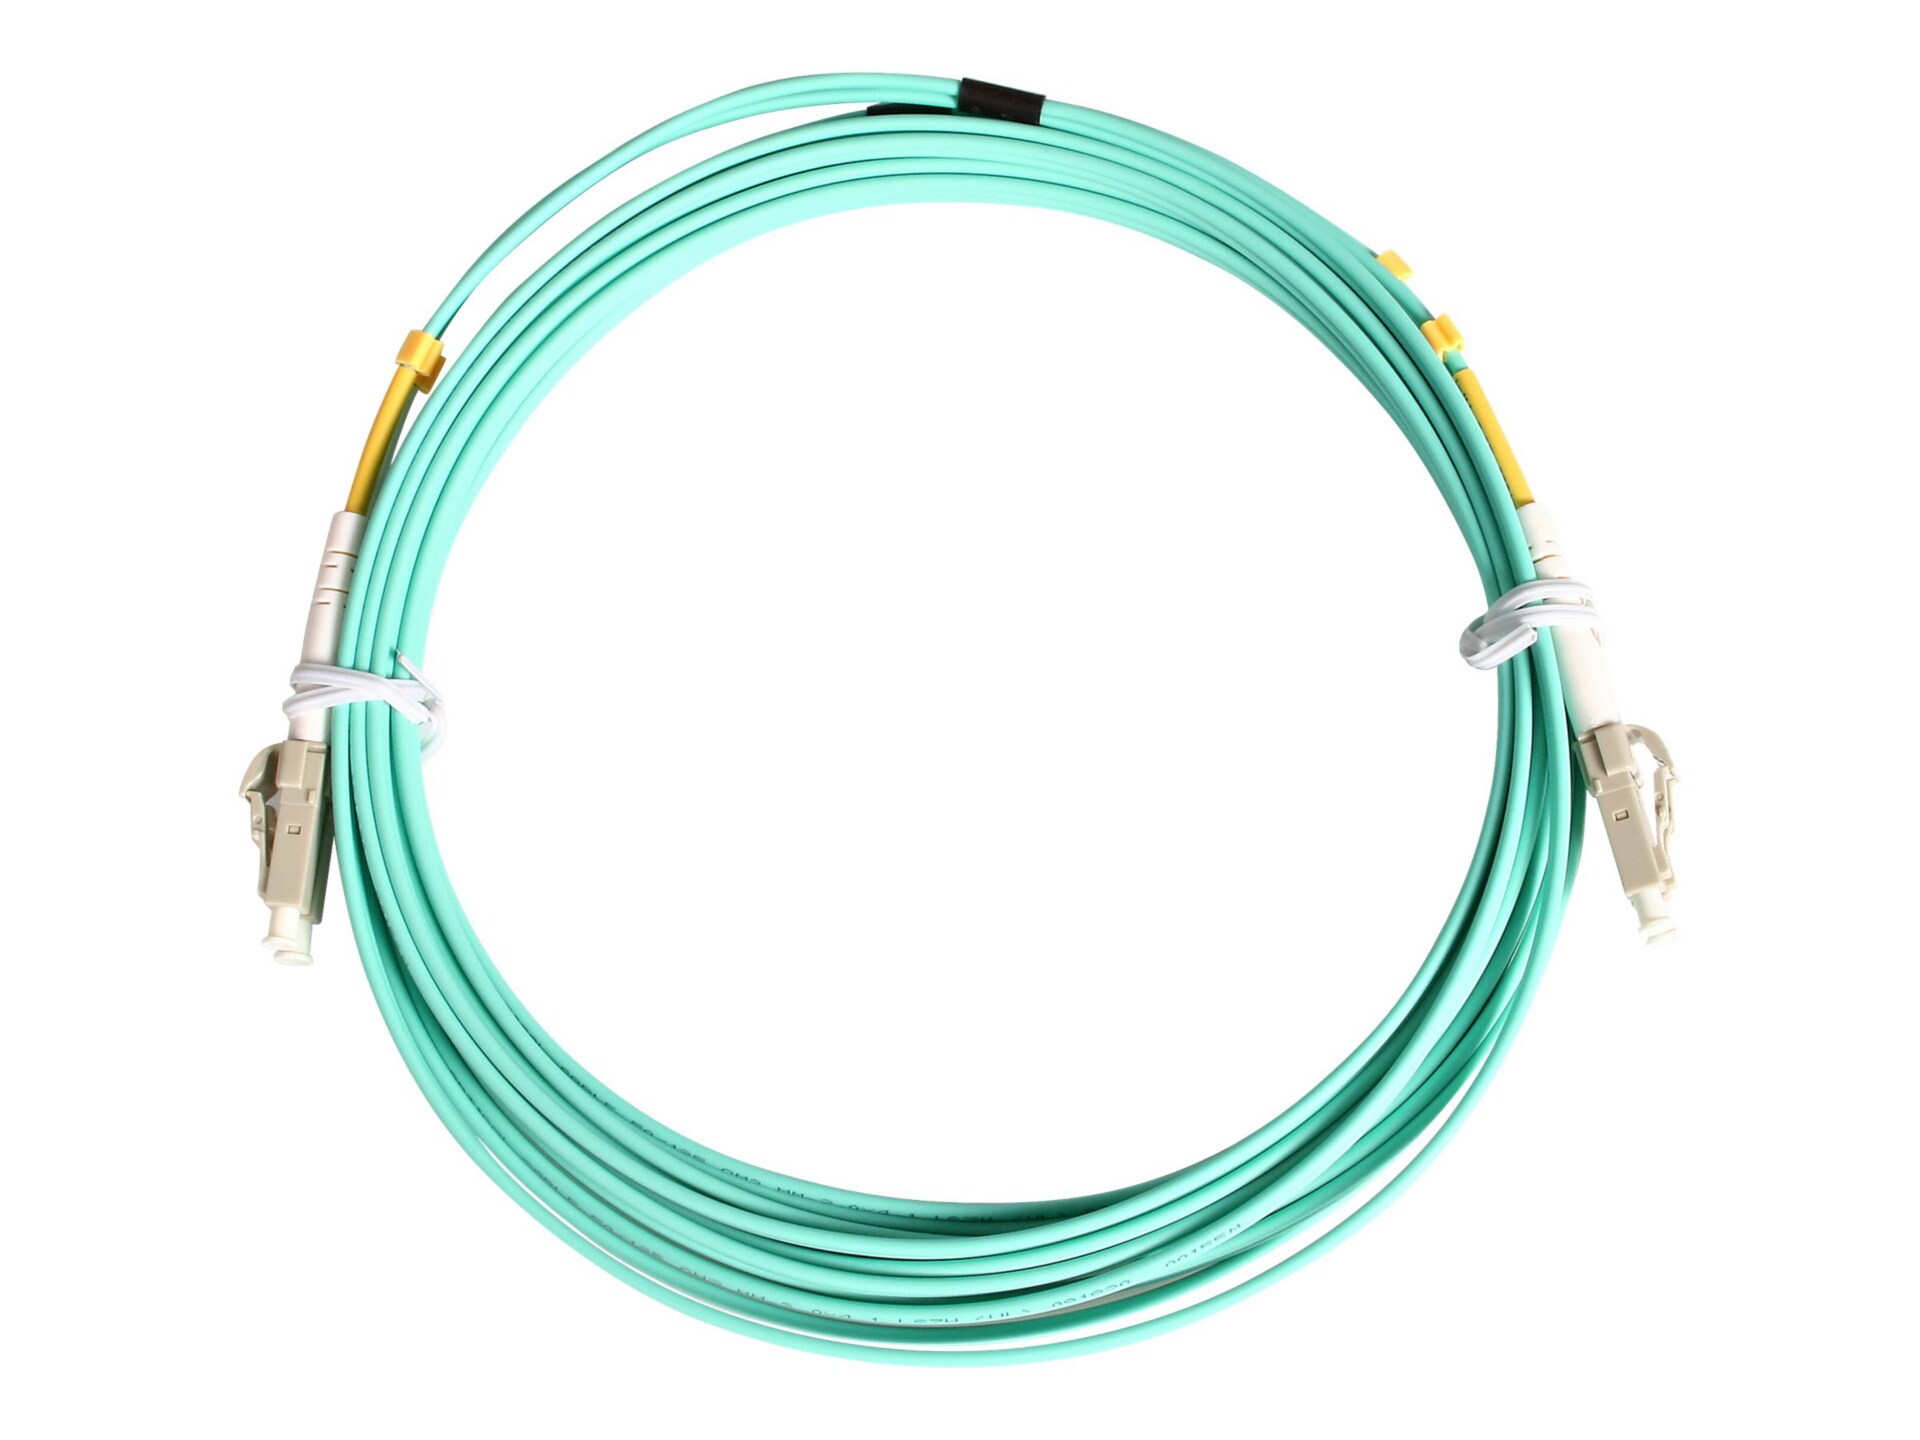 StarTech.com 10m (30ft) OM3 Multimode Fiber Cable, LOMMF Fiber Patch Cord